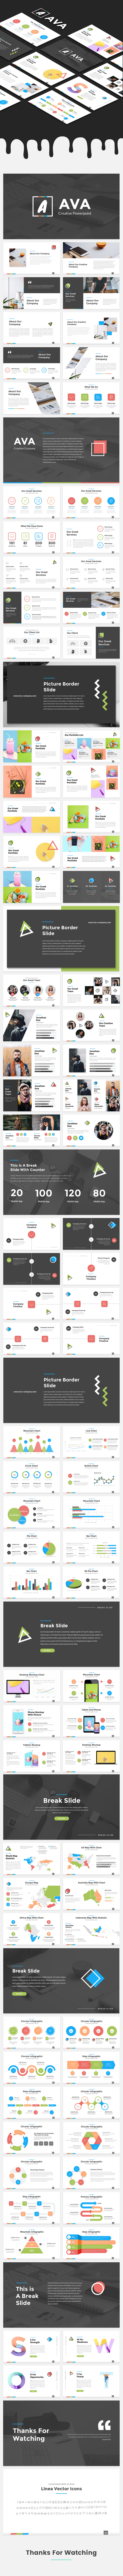 Powerpoint Keynote Google Slides presentation template presentation template creative envato graphicriver UI